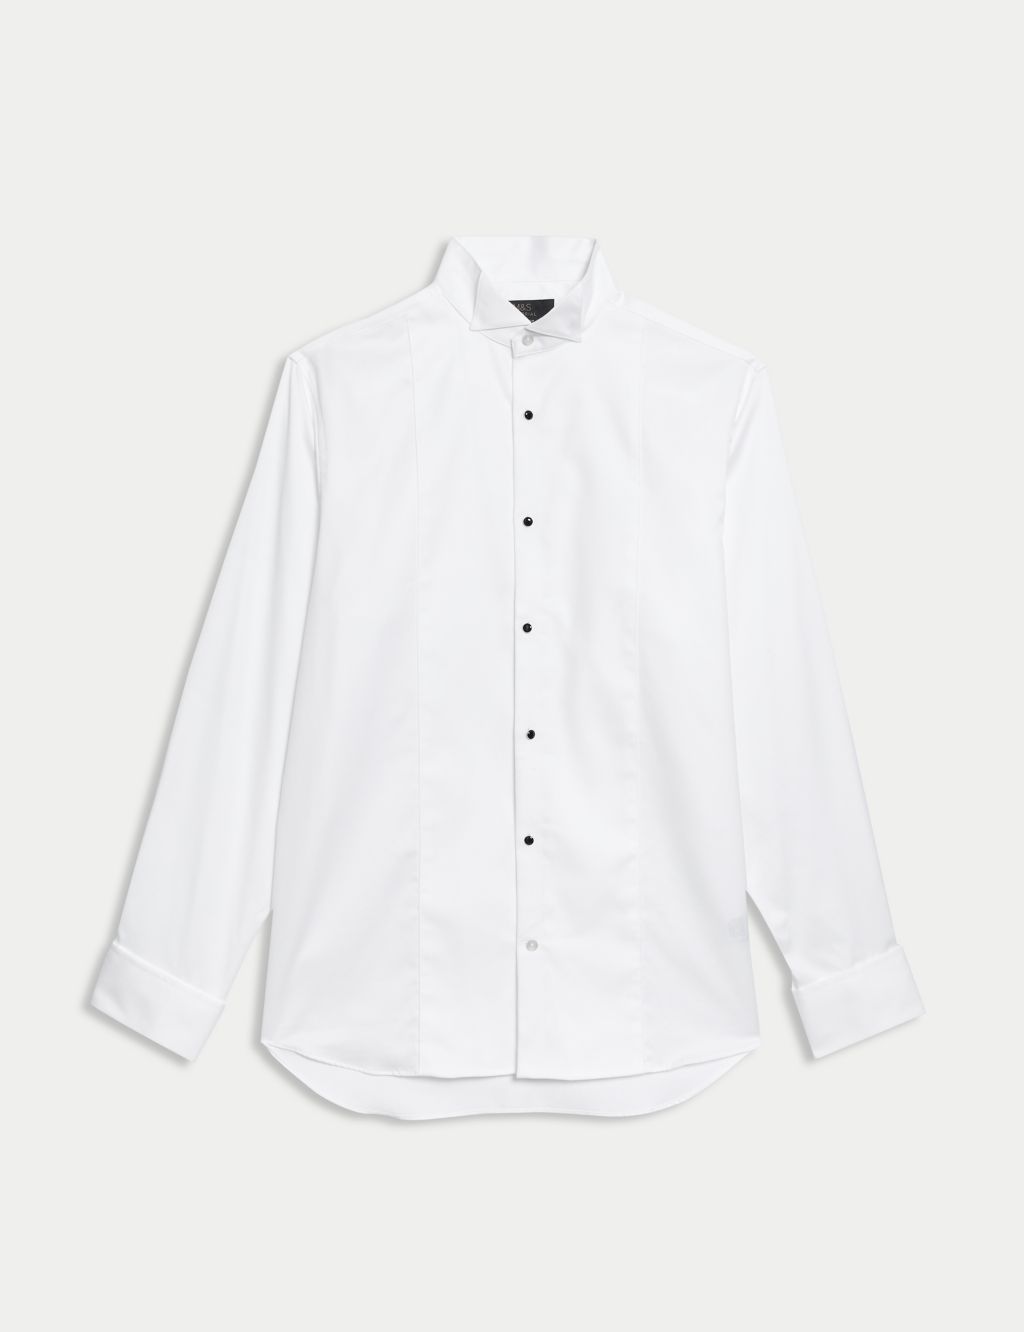 Regular Fit Pure Cotton Dress Shirt image 1